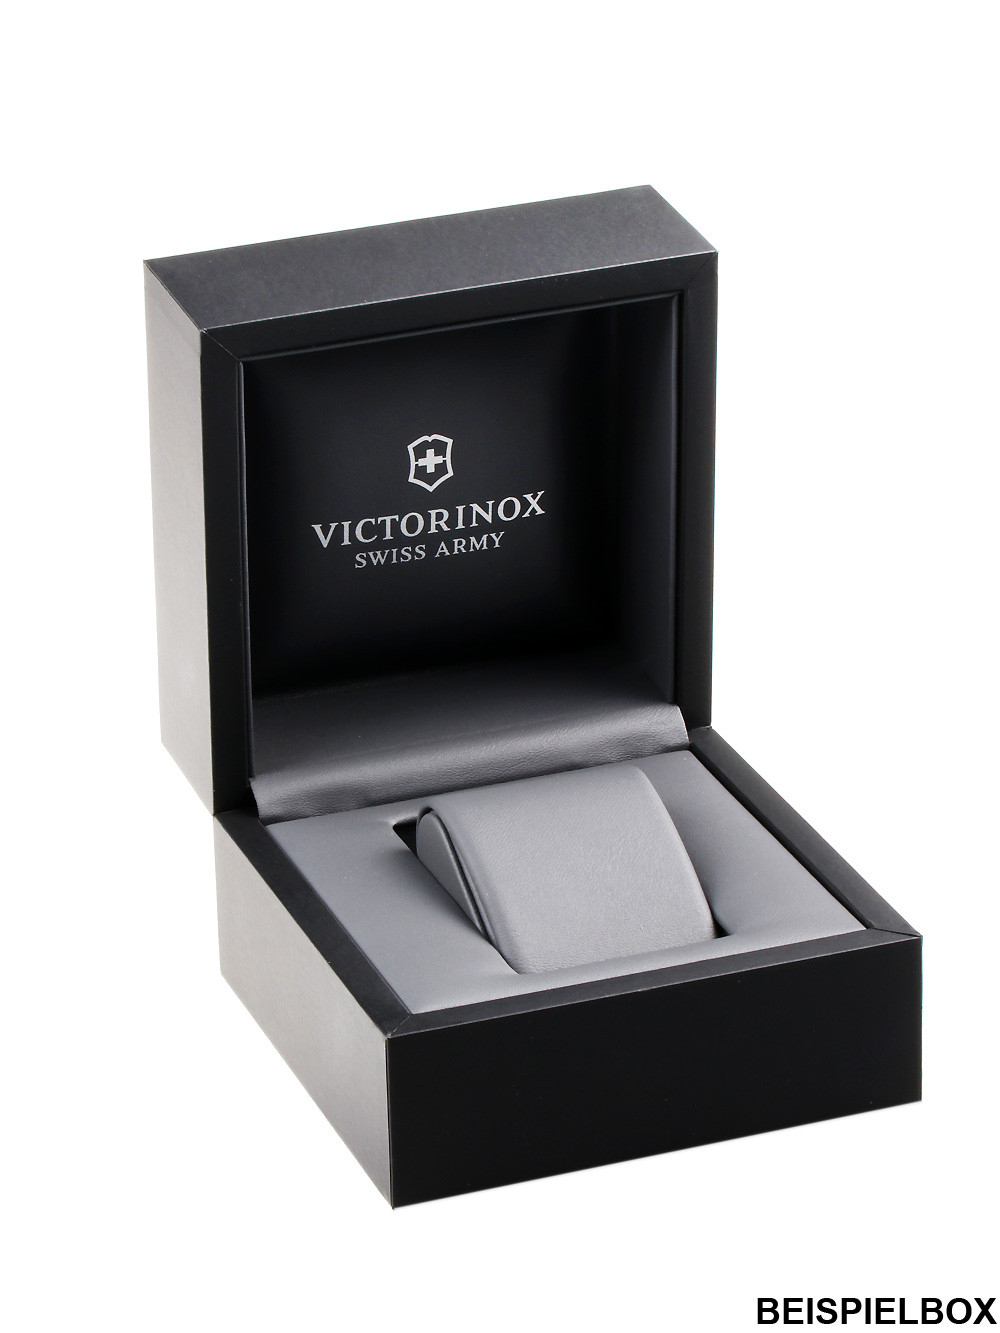 Zegarek damski Victorinox 241831 złoty